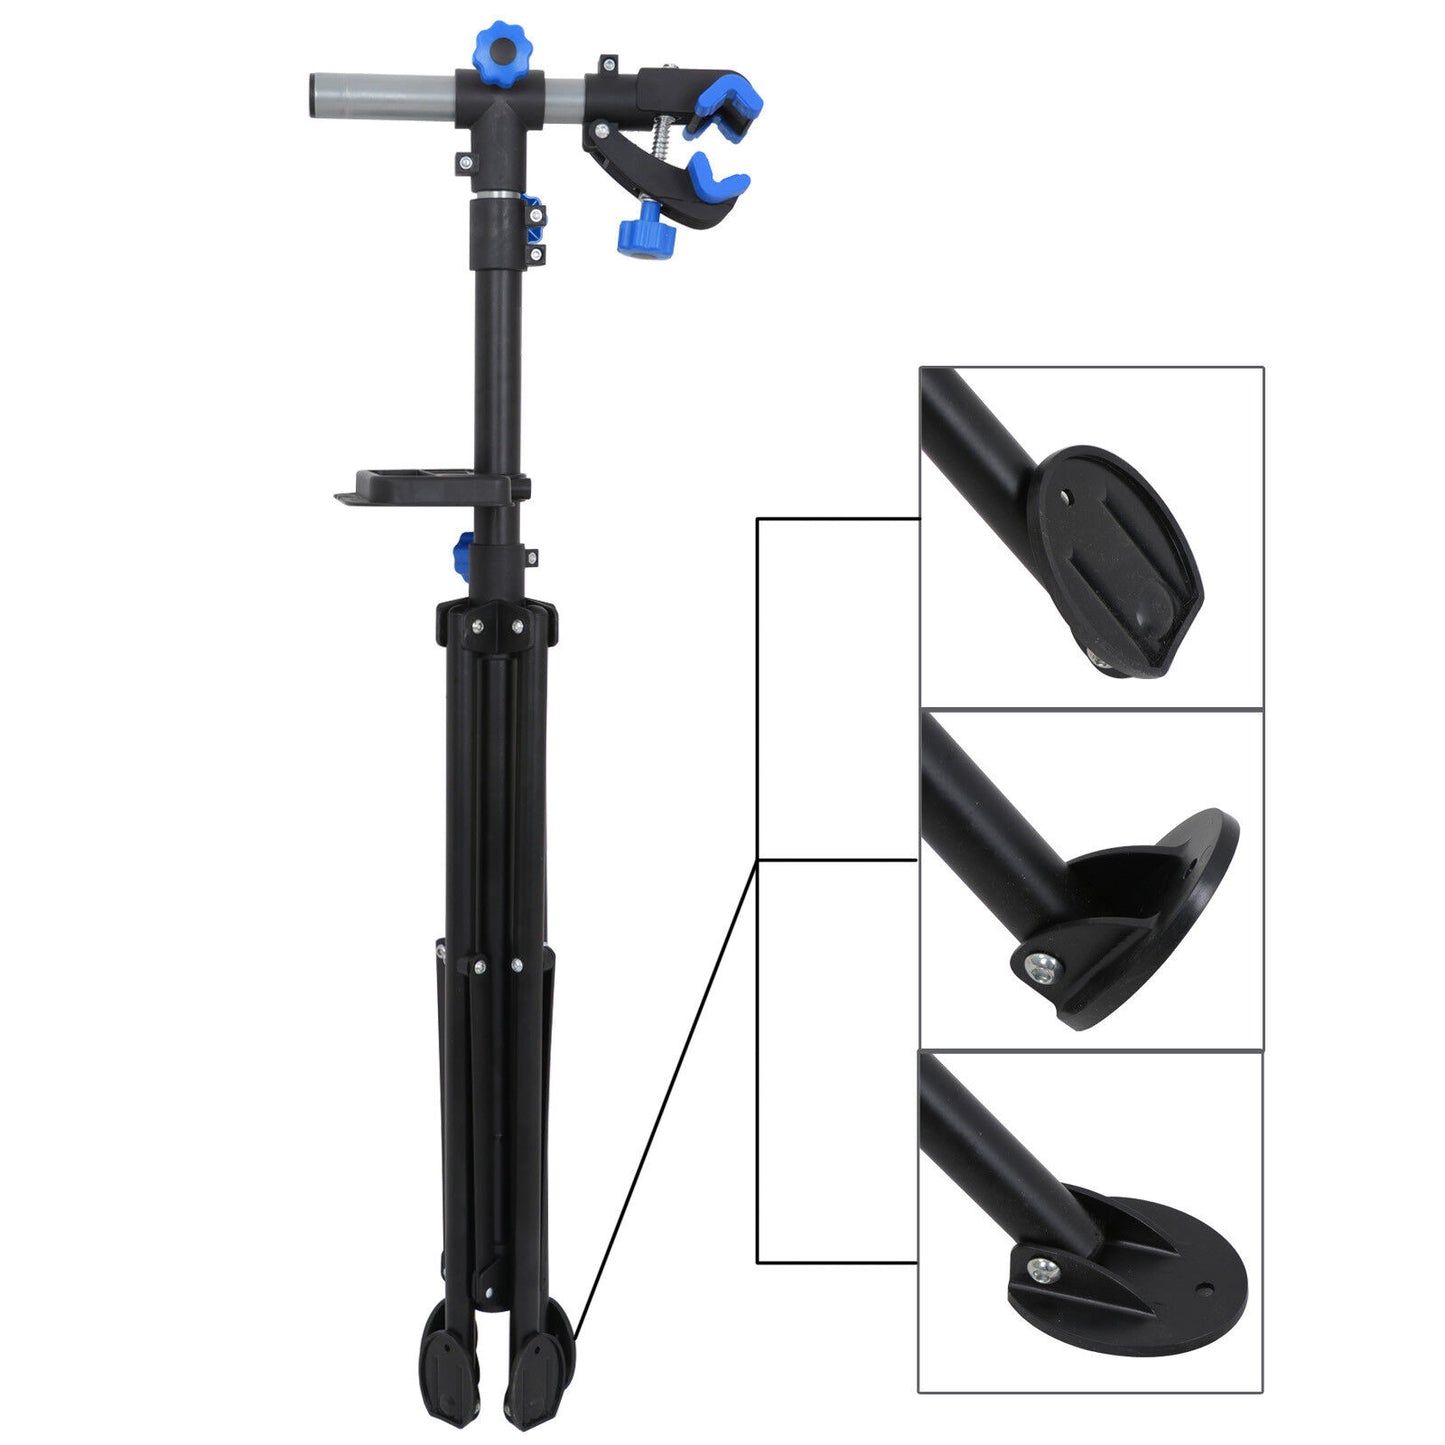 Bike Adjustable 42 - 74'' Bicycle Rack Repair Stand w/Tool Tray &Telescopic Arm